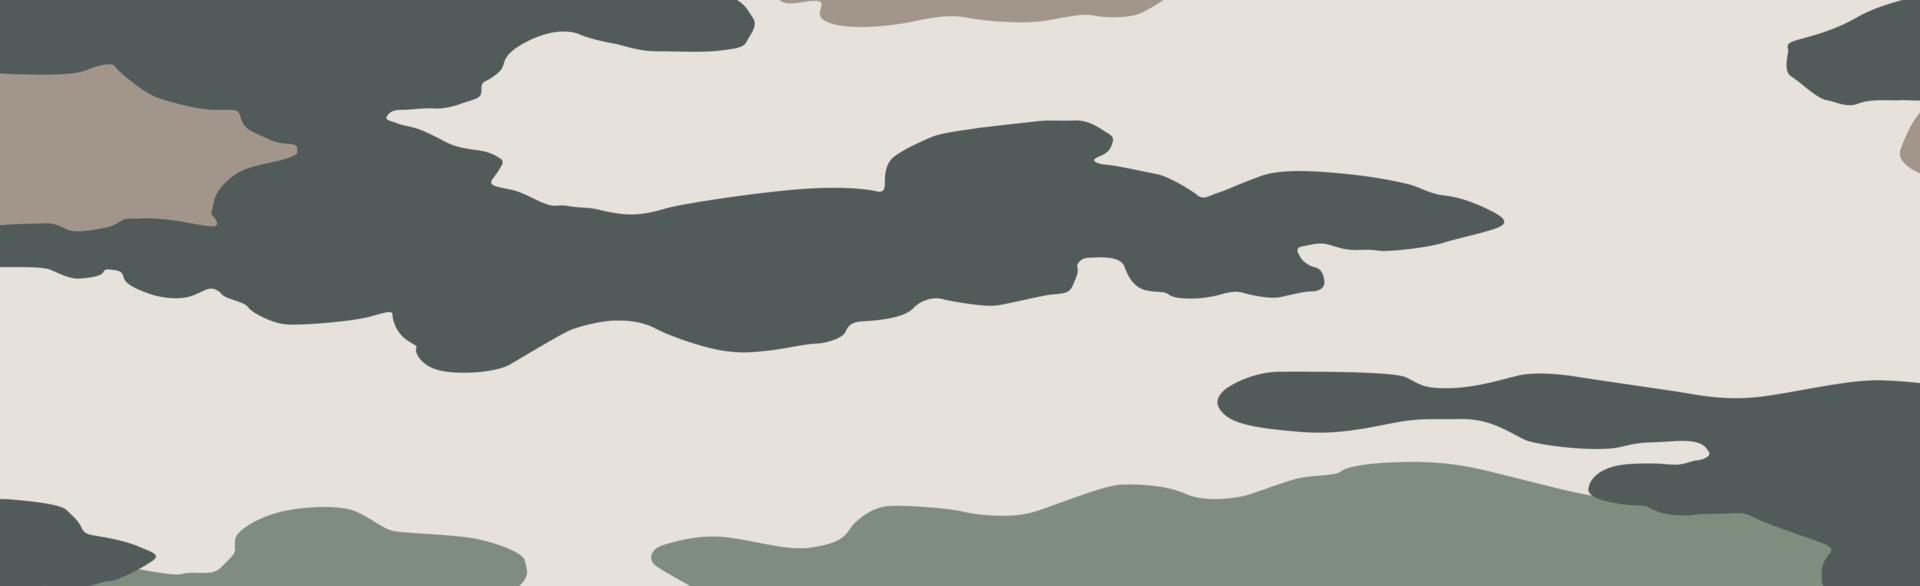 militär eller jakt panorama khaki geometriska sömlösa mönster - vektor